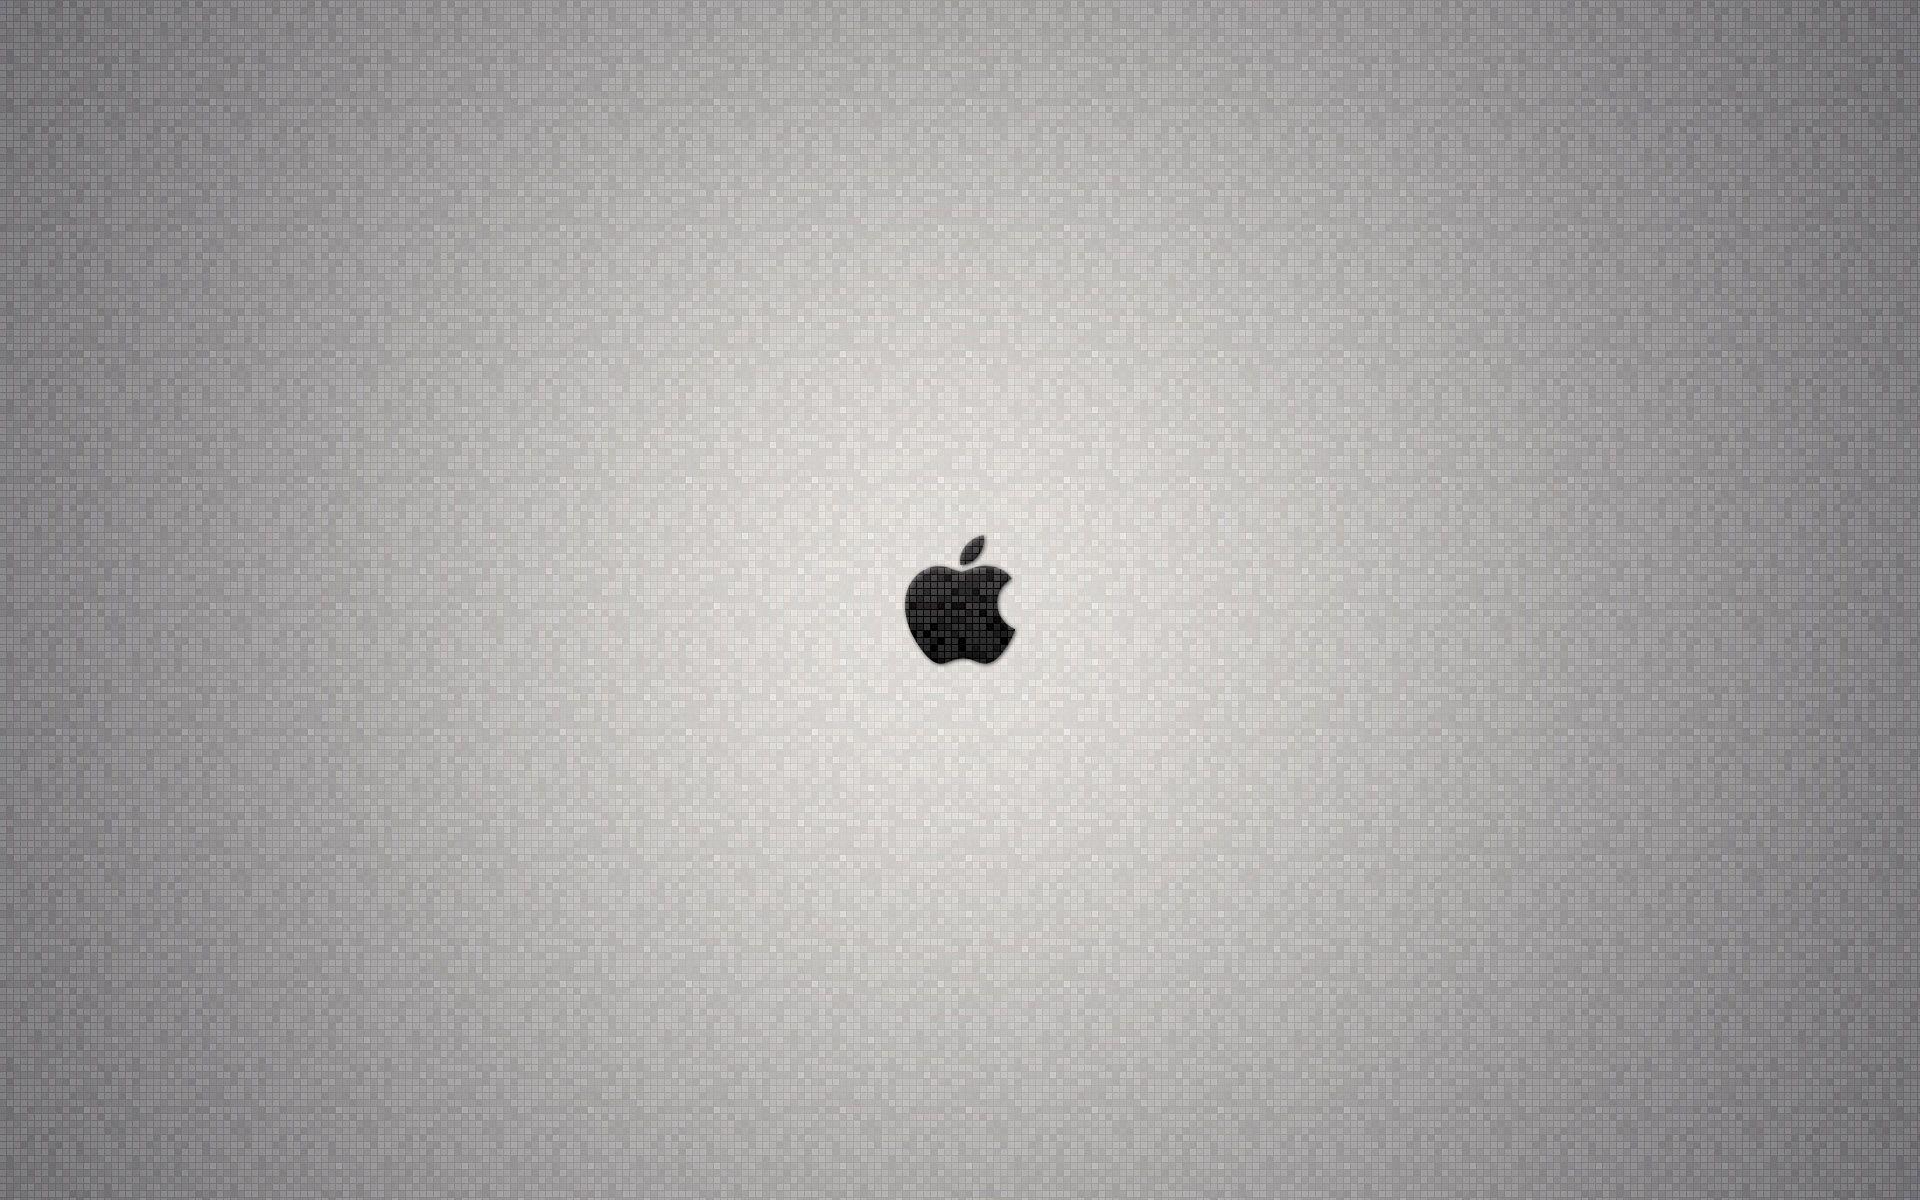 Small Apple Logo - Apple Icon Small Image Apple Logo, Small Apple Logo